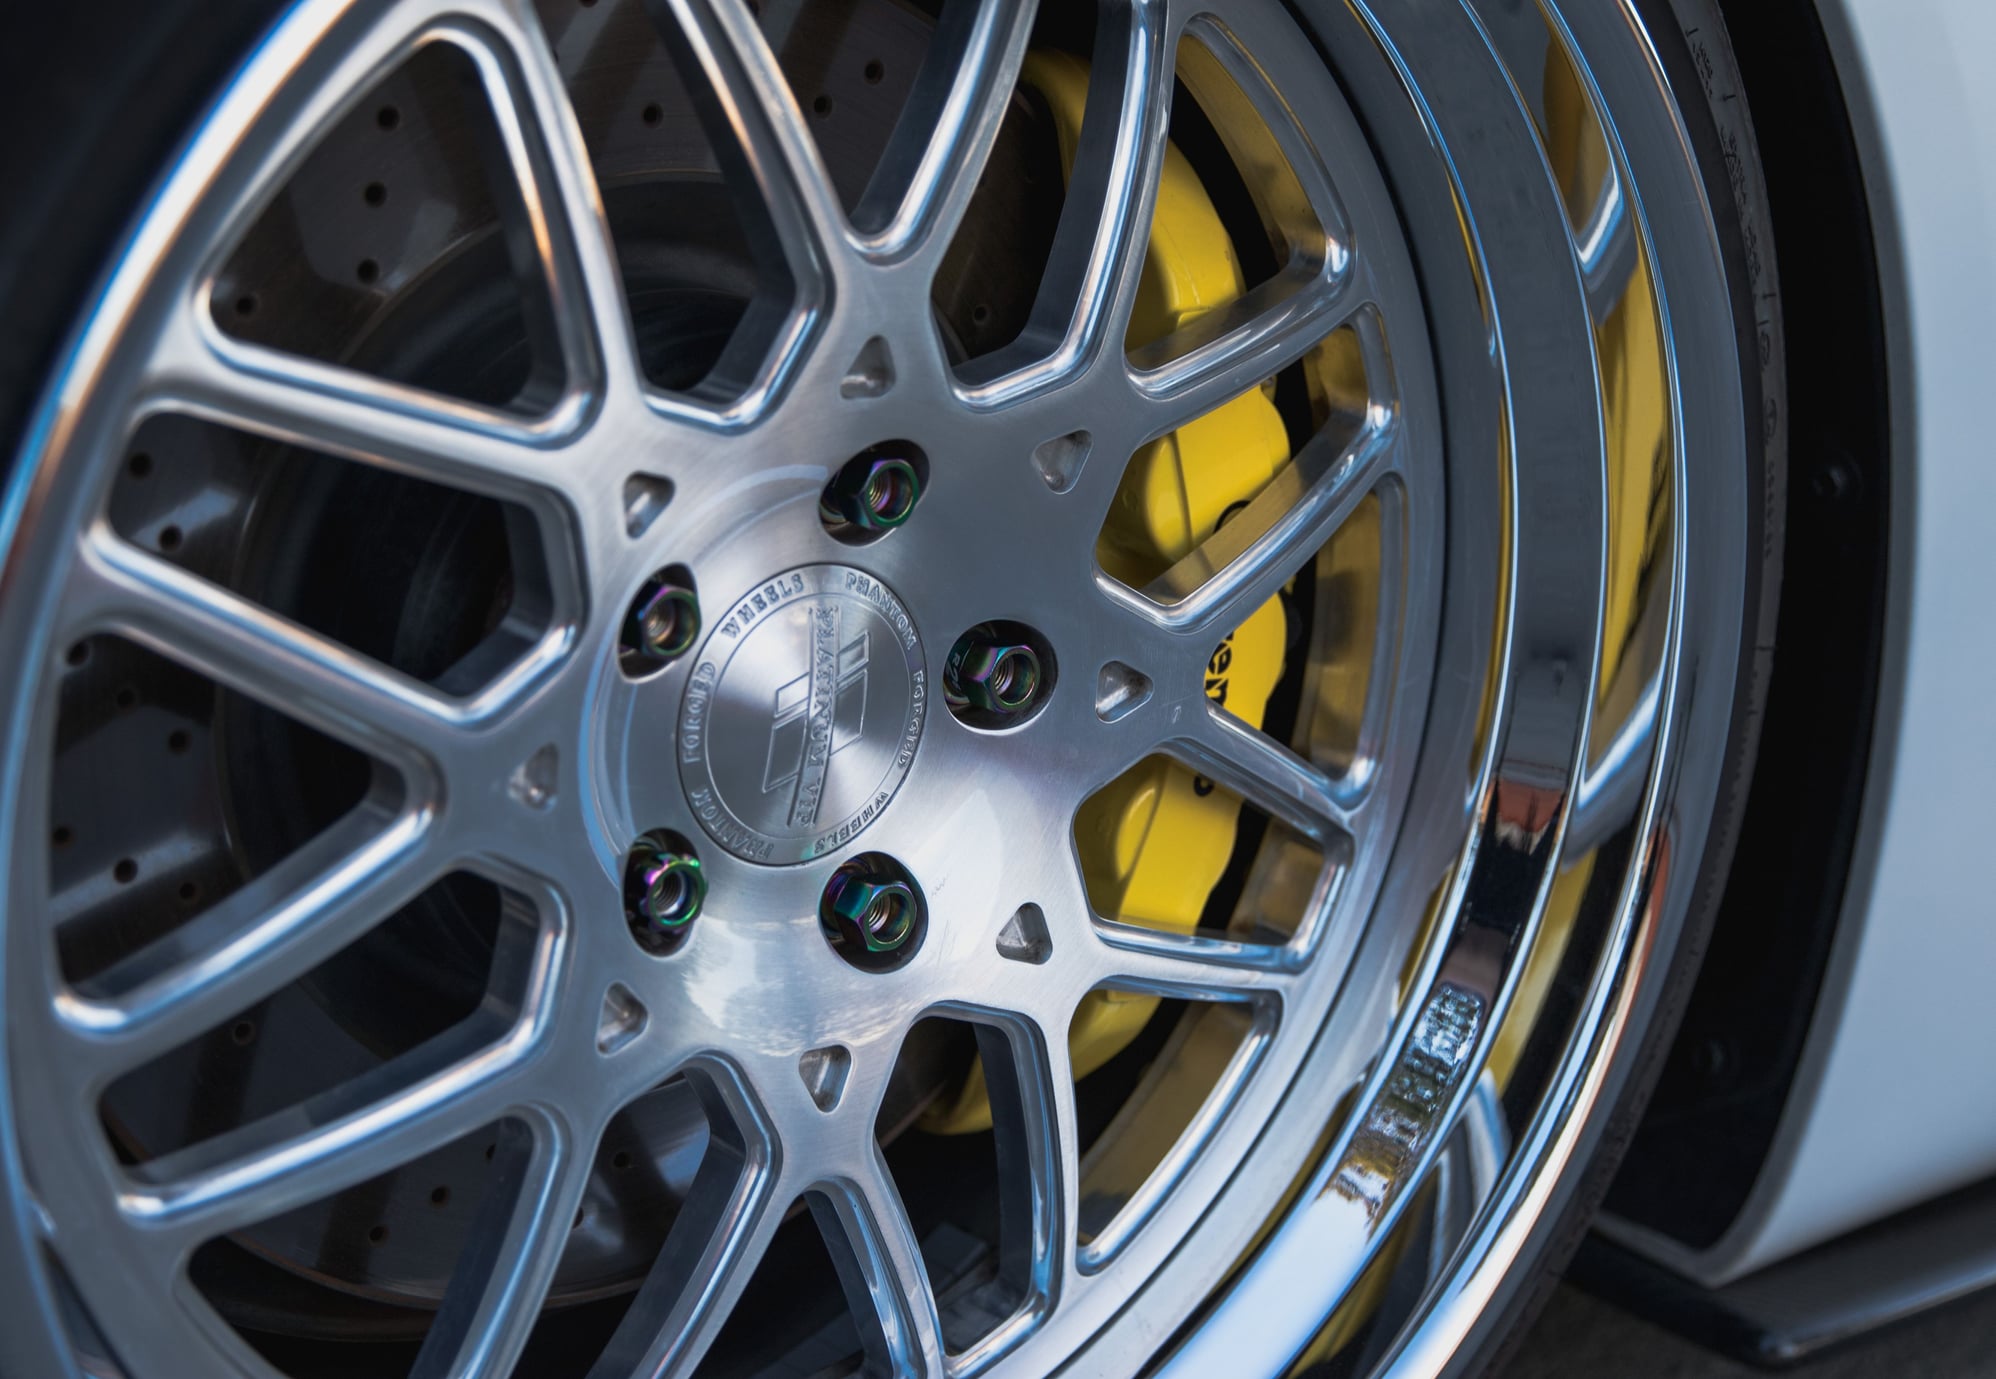 Wheels and Tires/Axles - F/S: 19" Platinum VIP series 1 wheels - Used - San Diego, CA 92131, United States